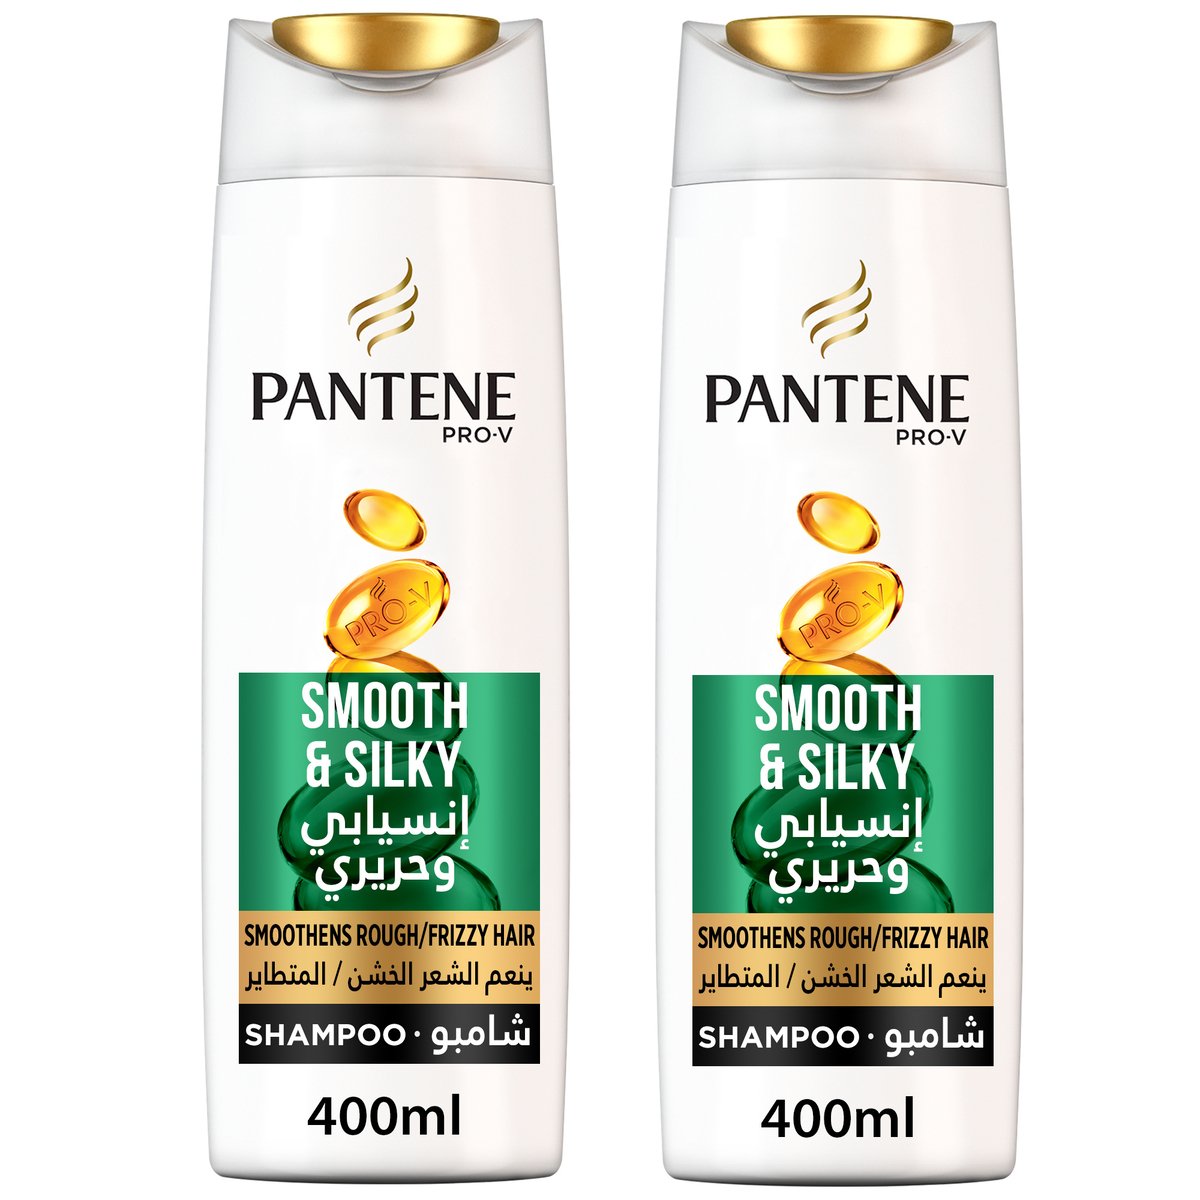 Pantene Shampoo Smooth & Silky 2 x 400ml